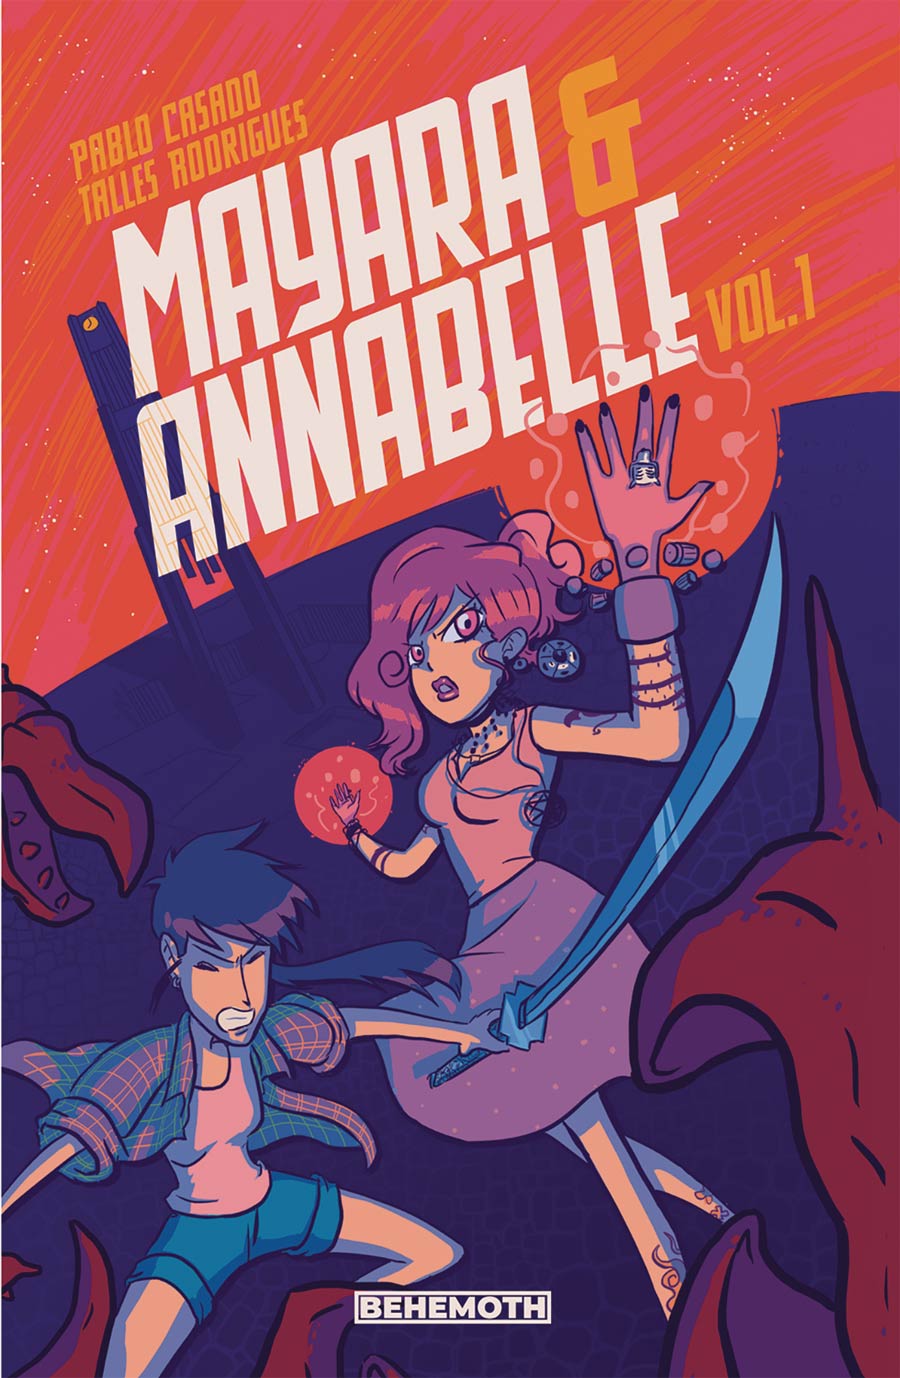 Mayara & Annabelle Vol 1 TP